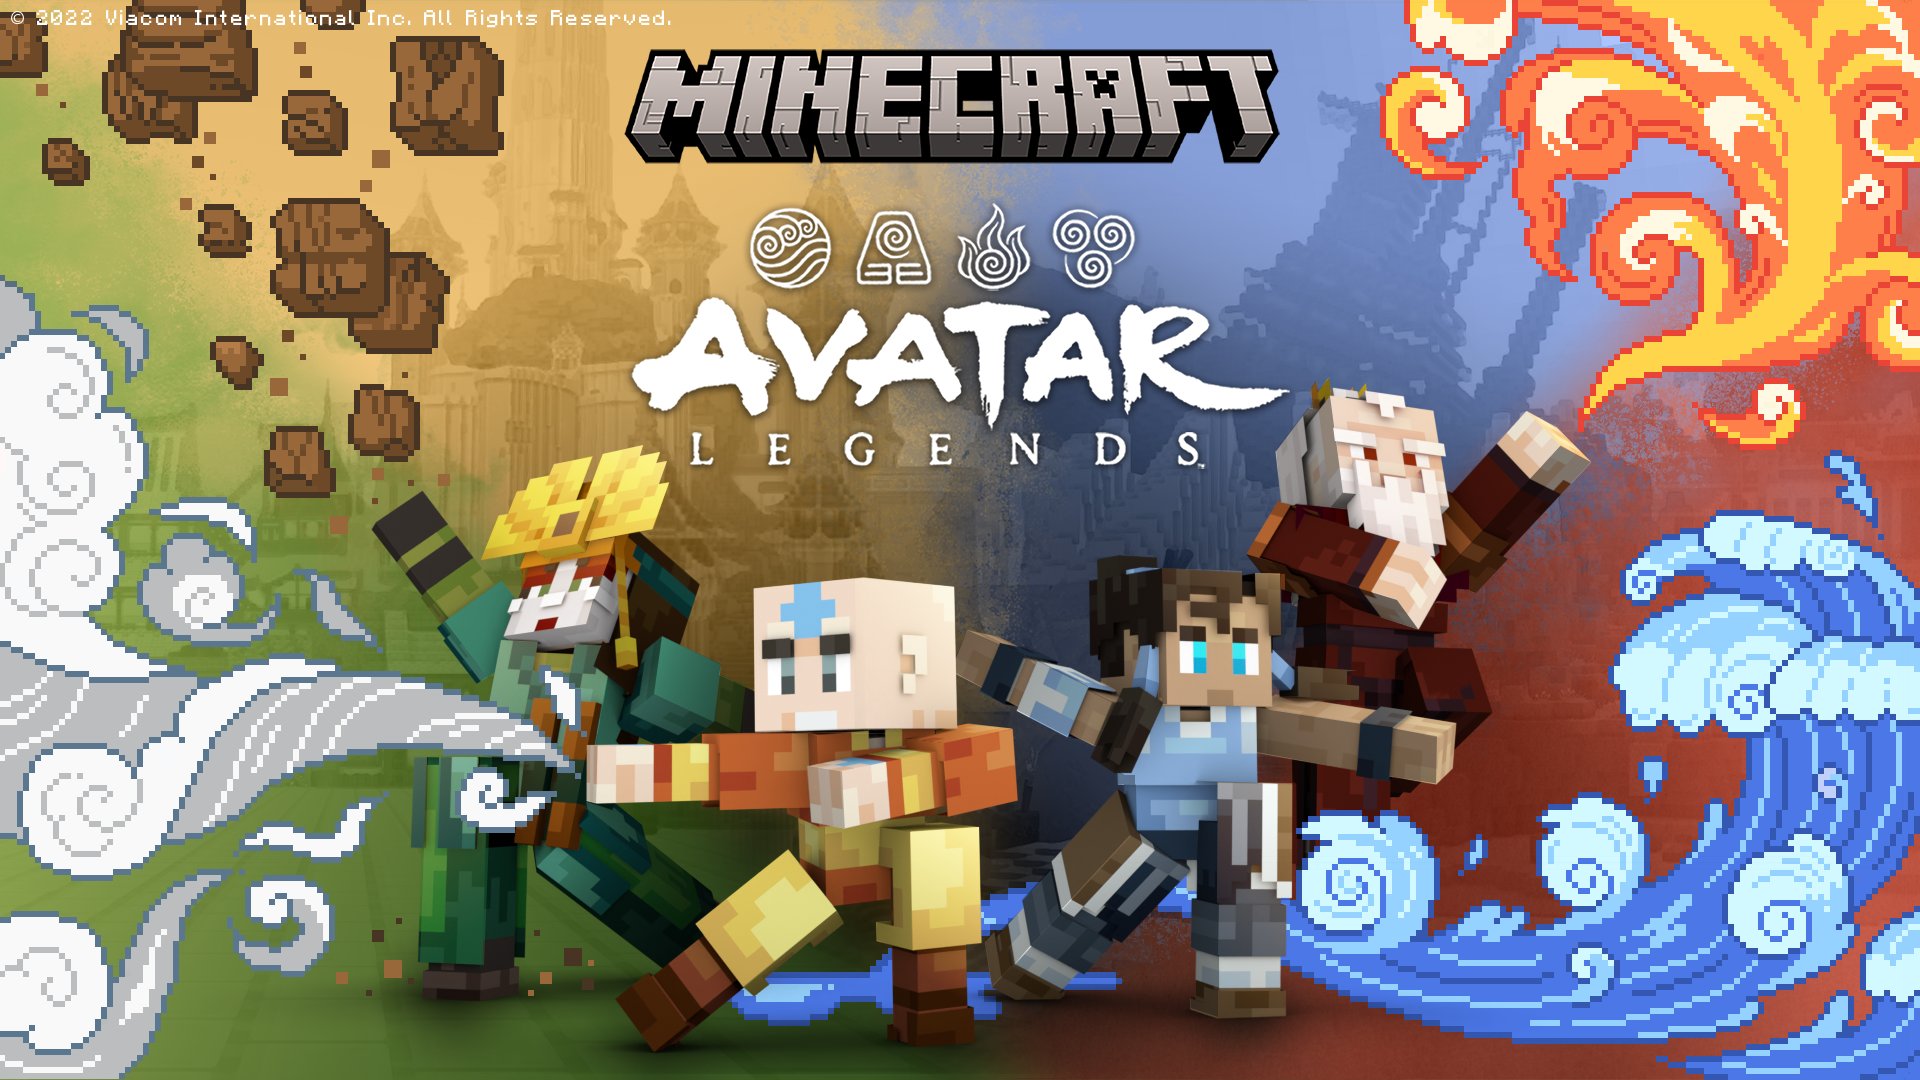 Minecraft recibirá DLC sobre el Avatar Aang en diciembre